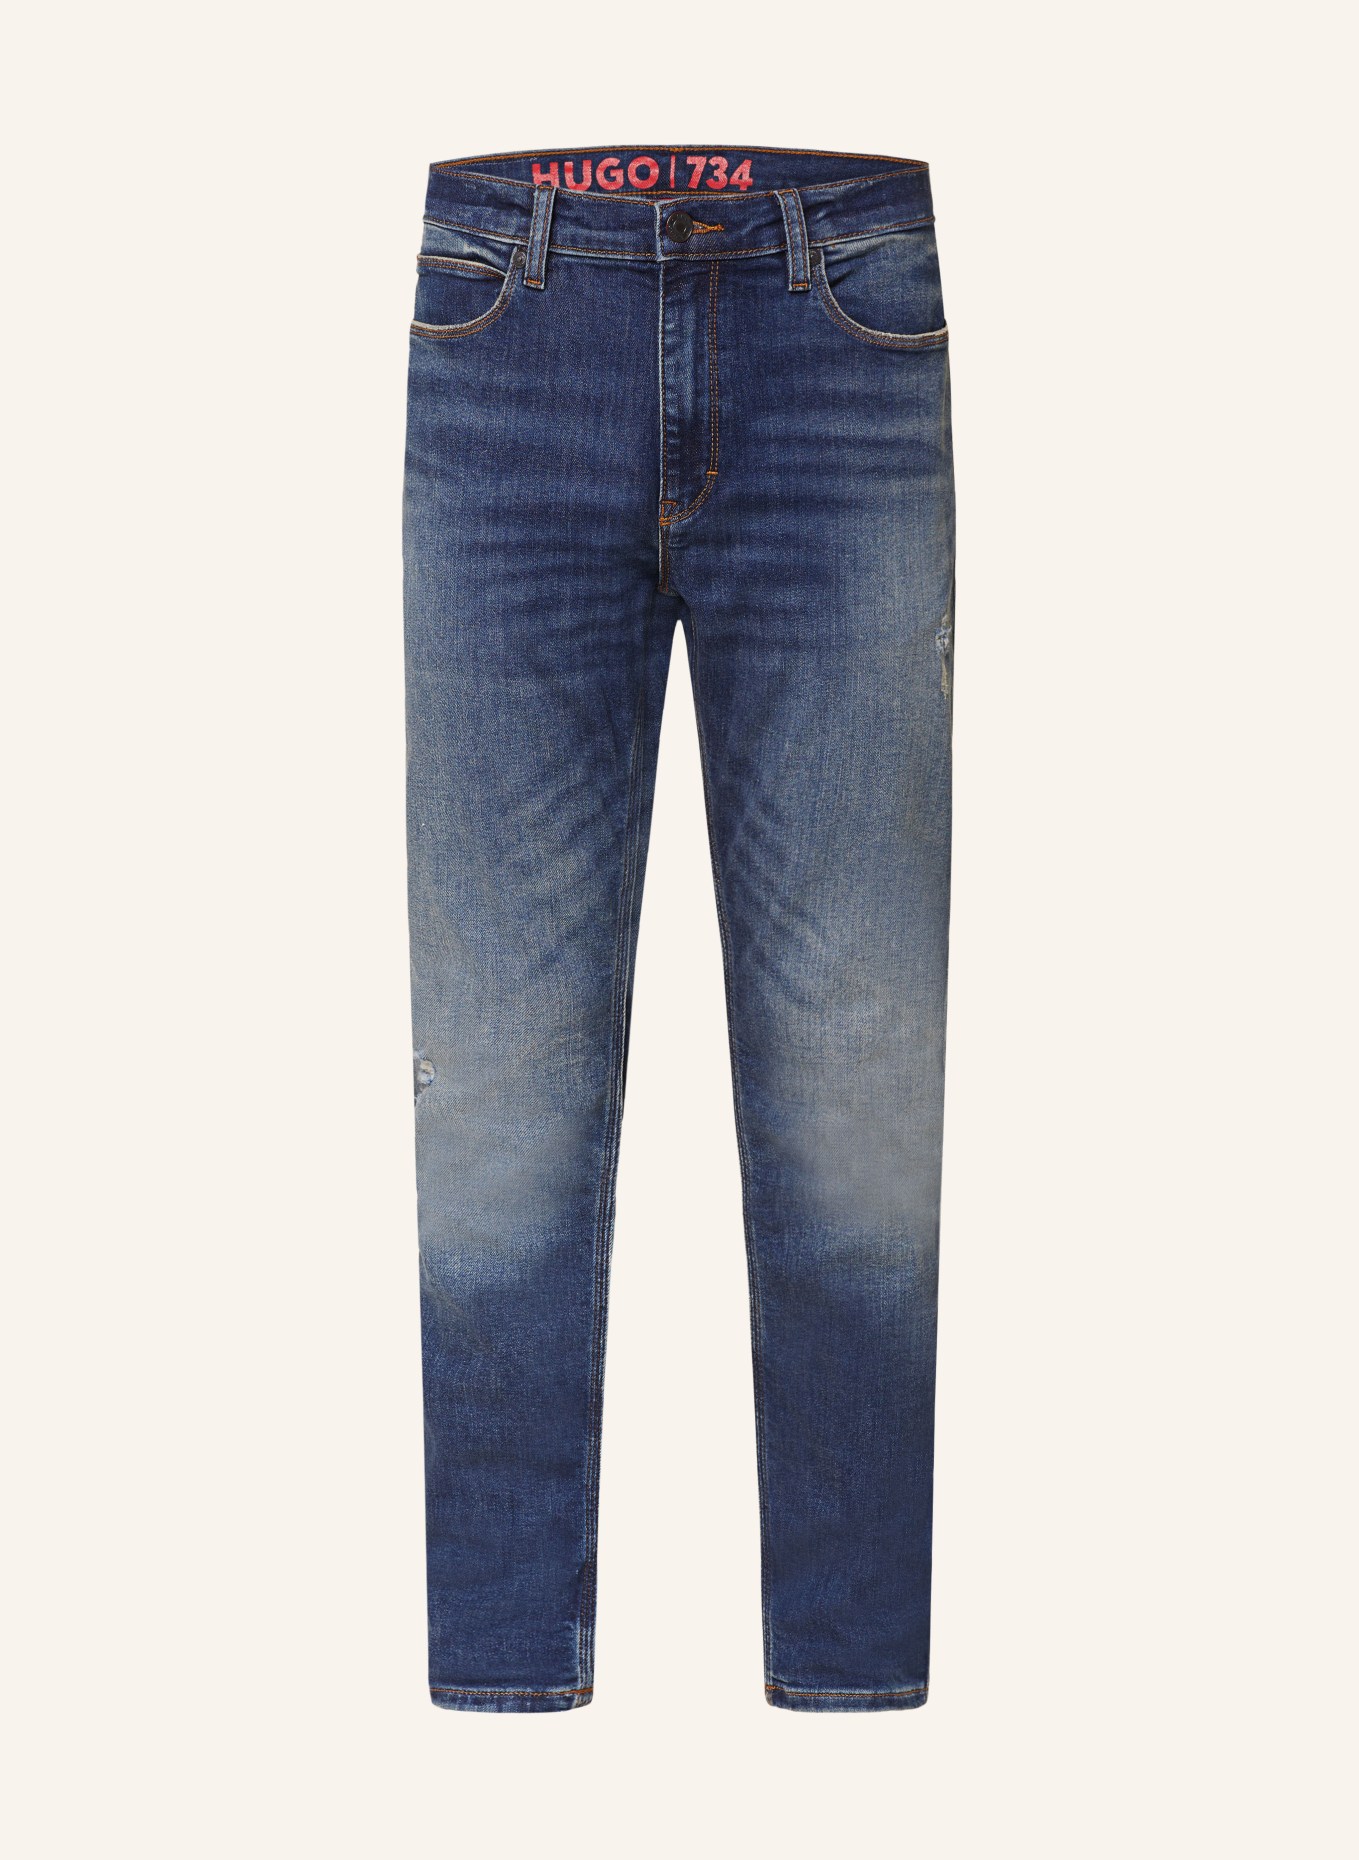 HUGO Jeans 734 Extra Slim Fit, Farbe: 412 NAVY (Bild 1)